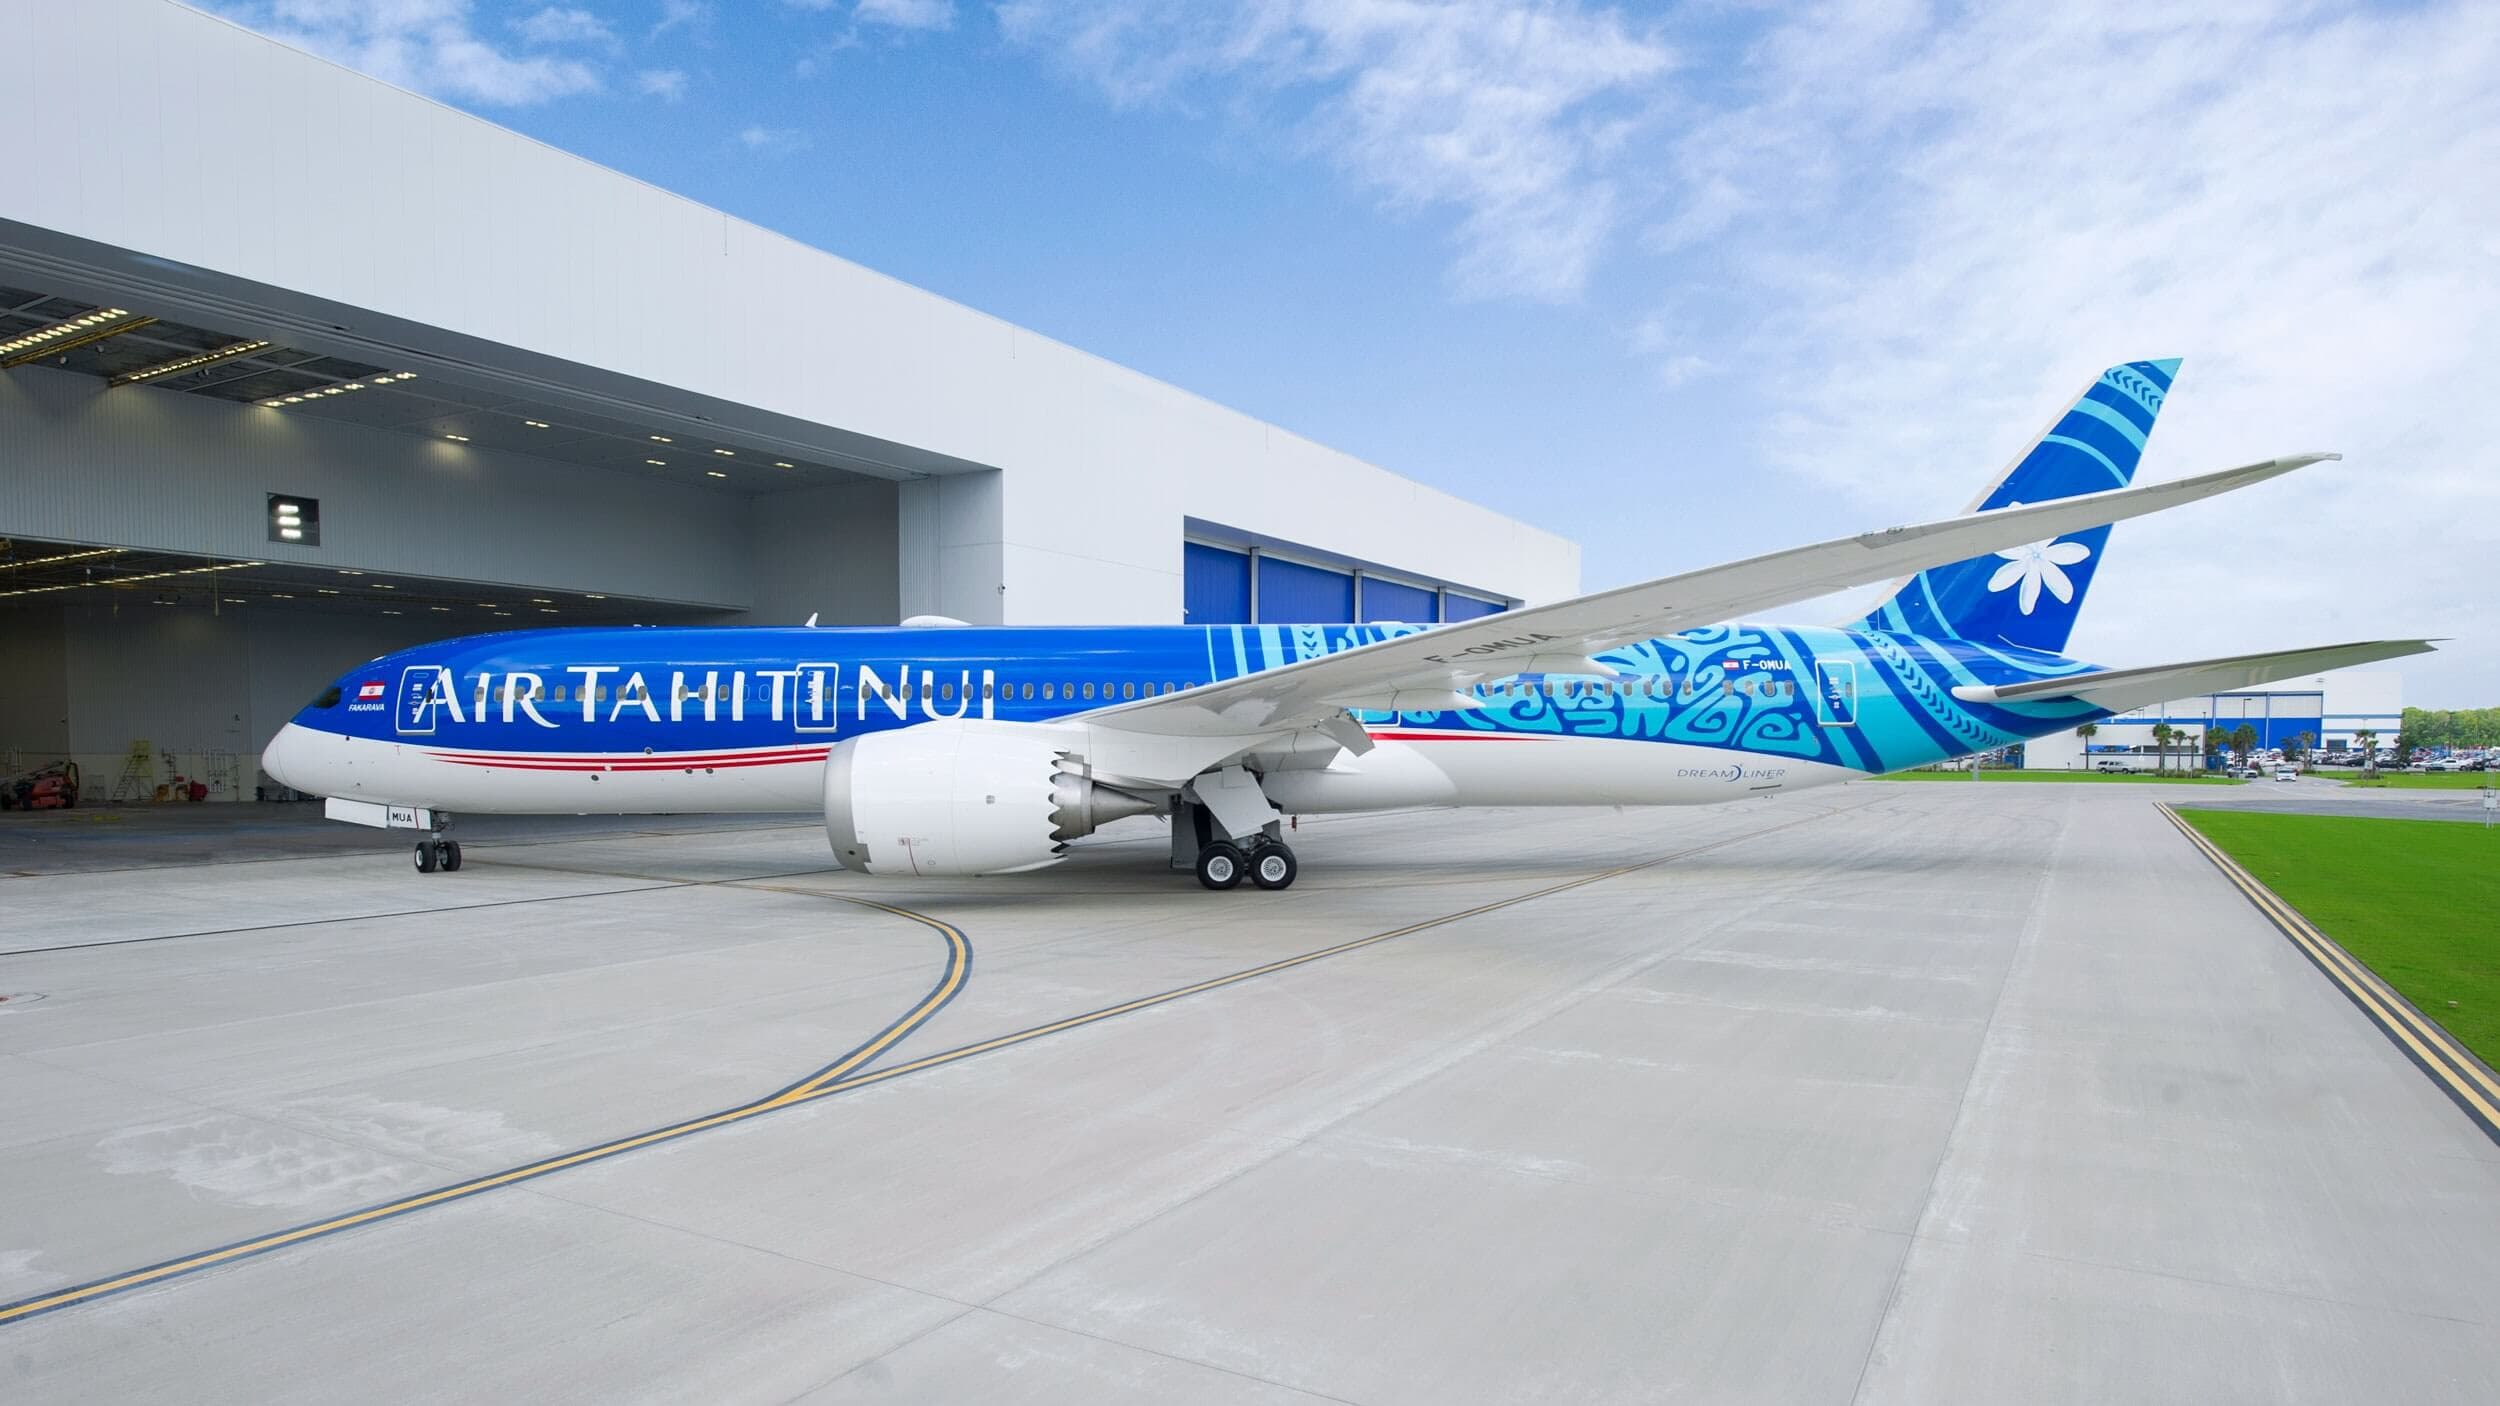 Air Tahiti Nui 787 parked at gate